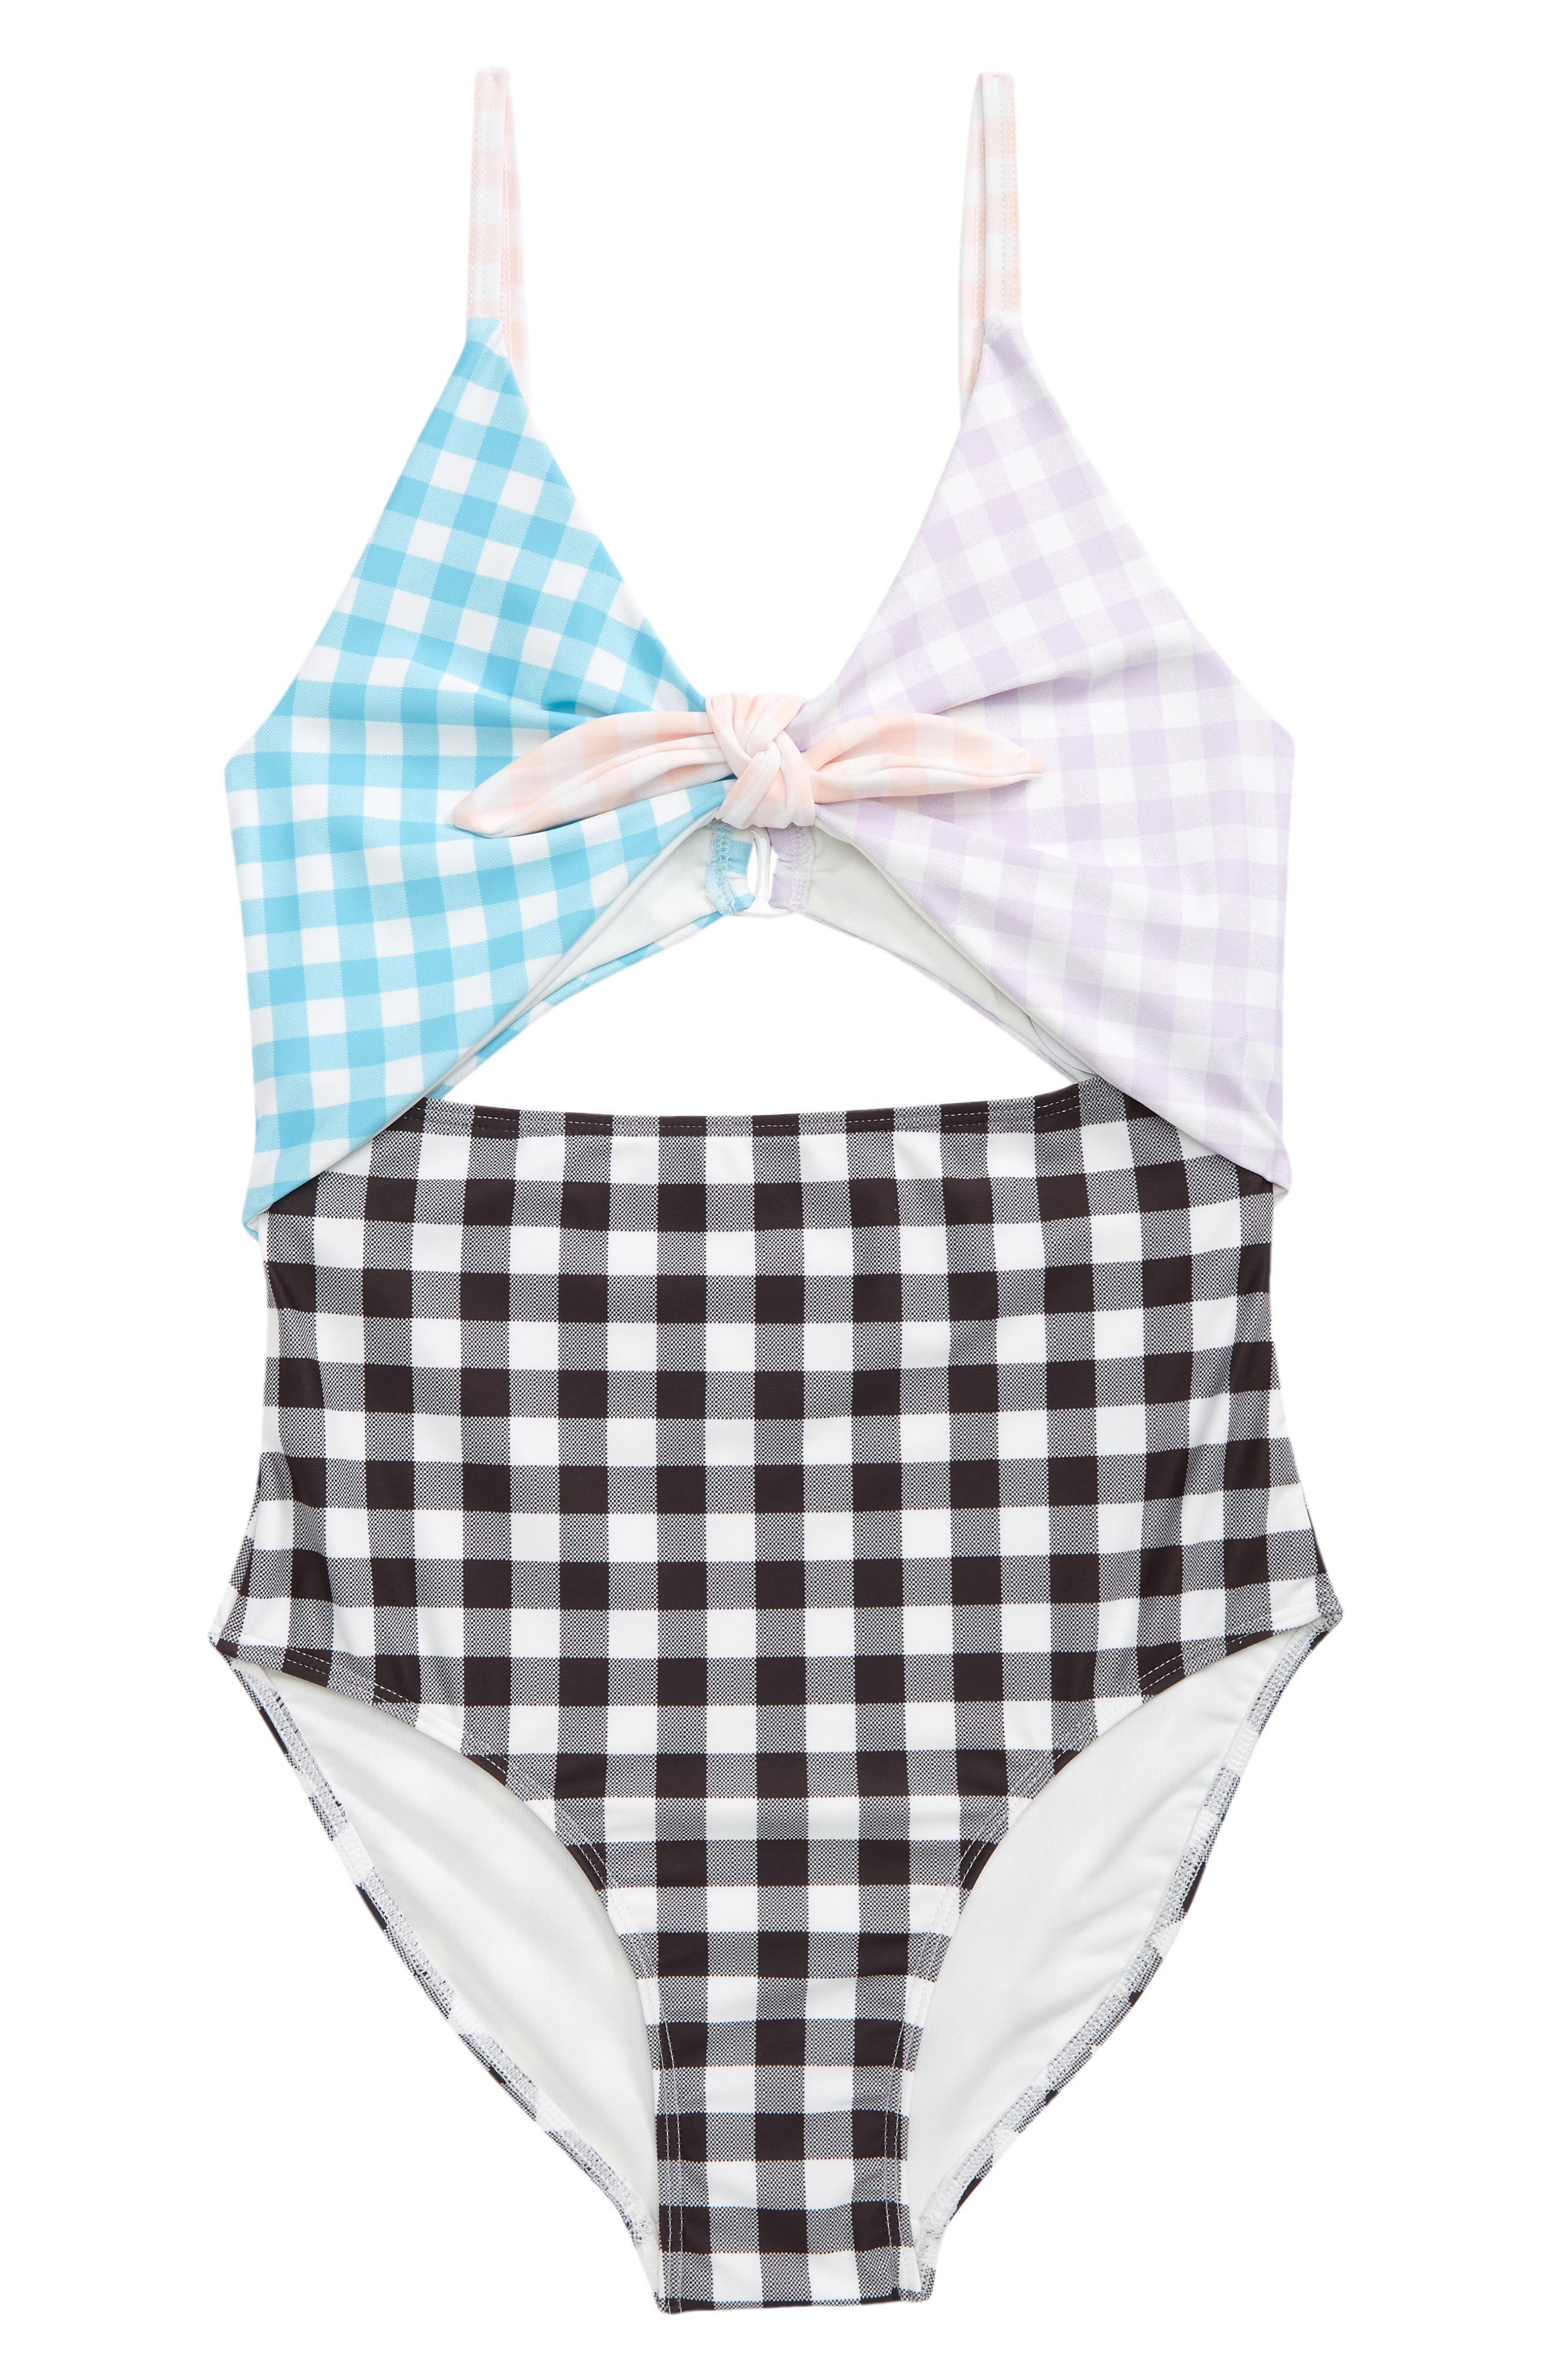 Girls Swimsuit Two Piece Long Sleeve UV Swimwear Swimming Costume for Little Girls 6M-10Y 